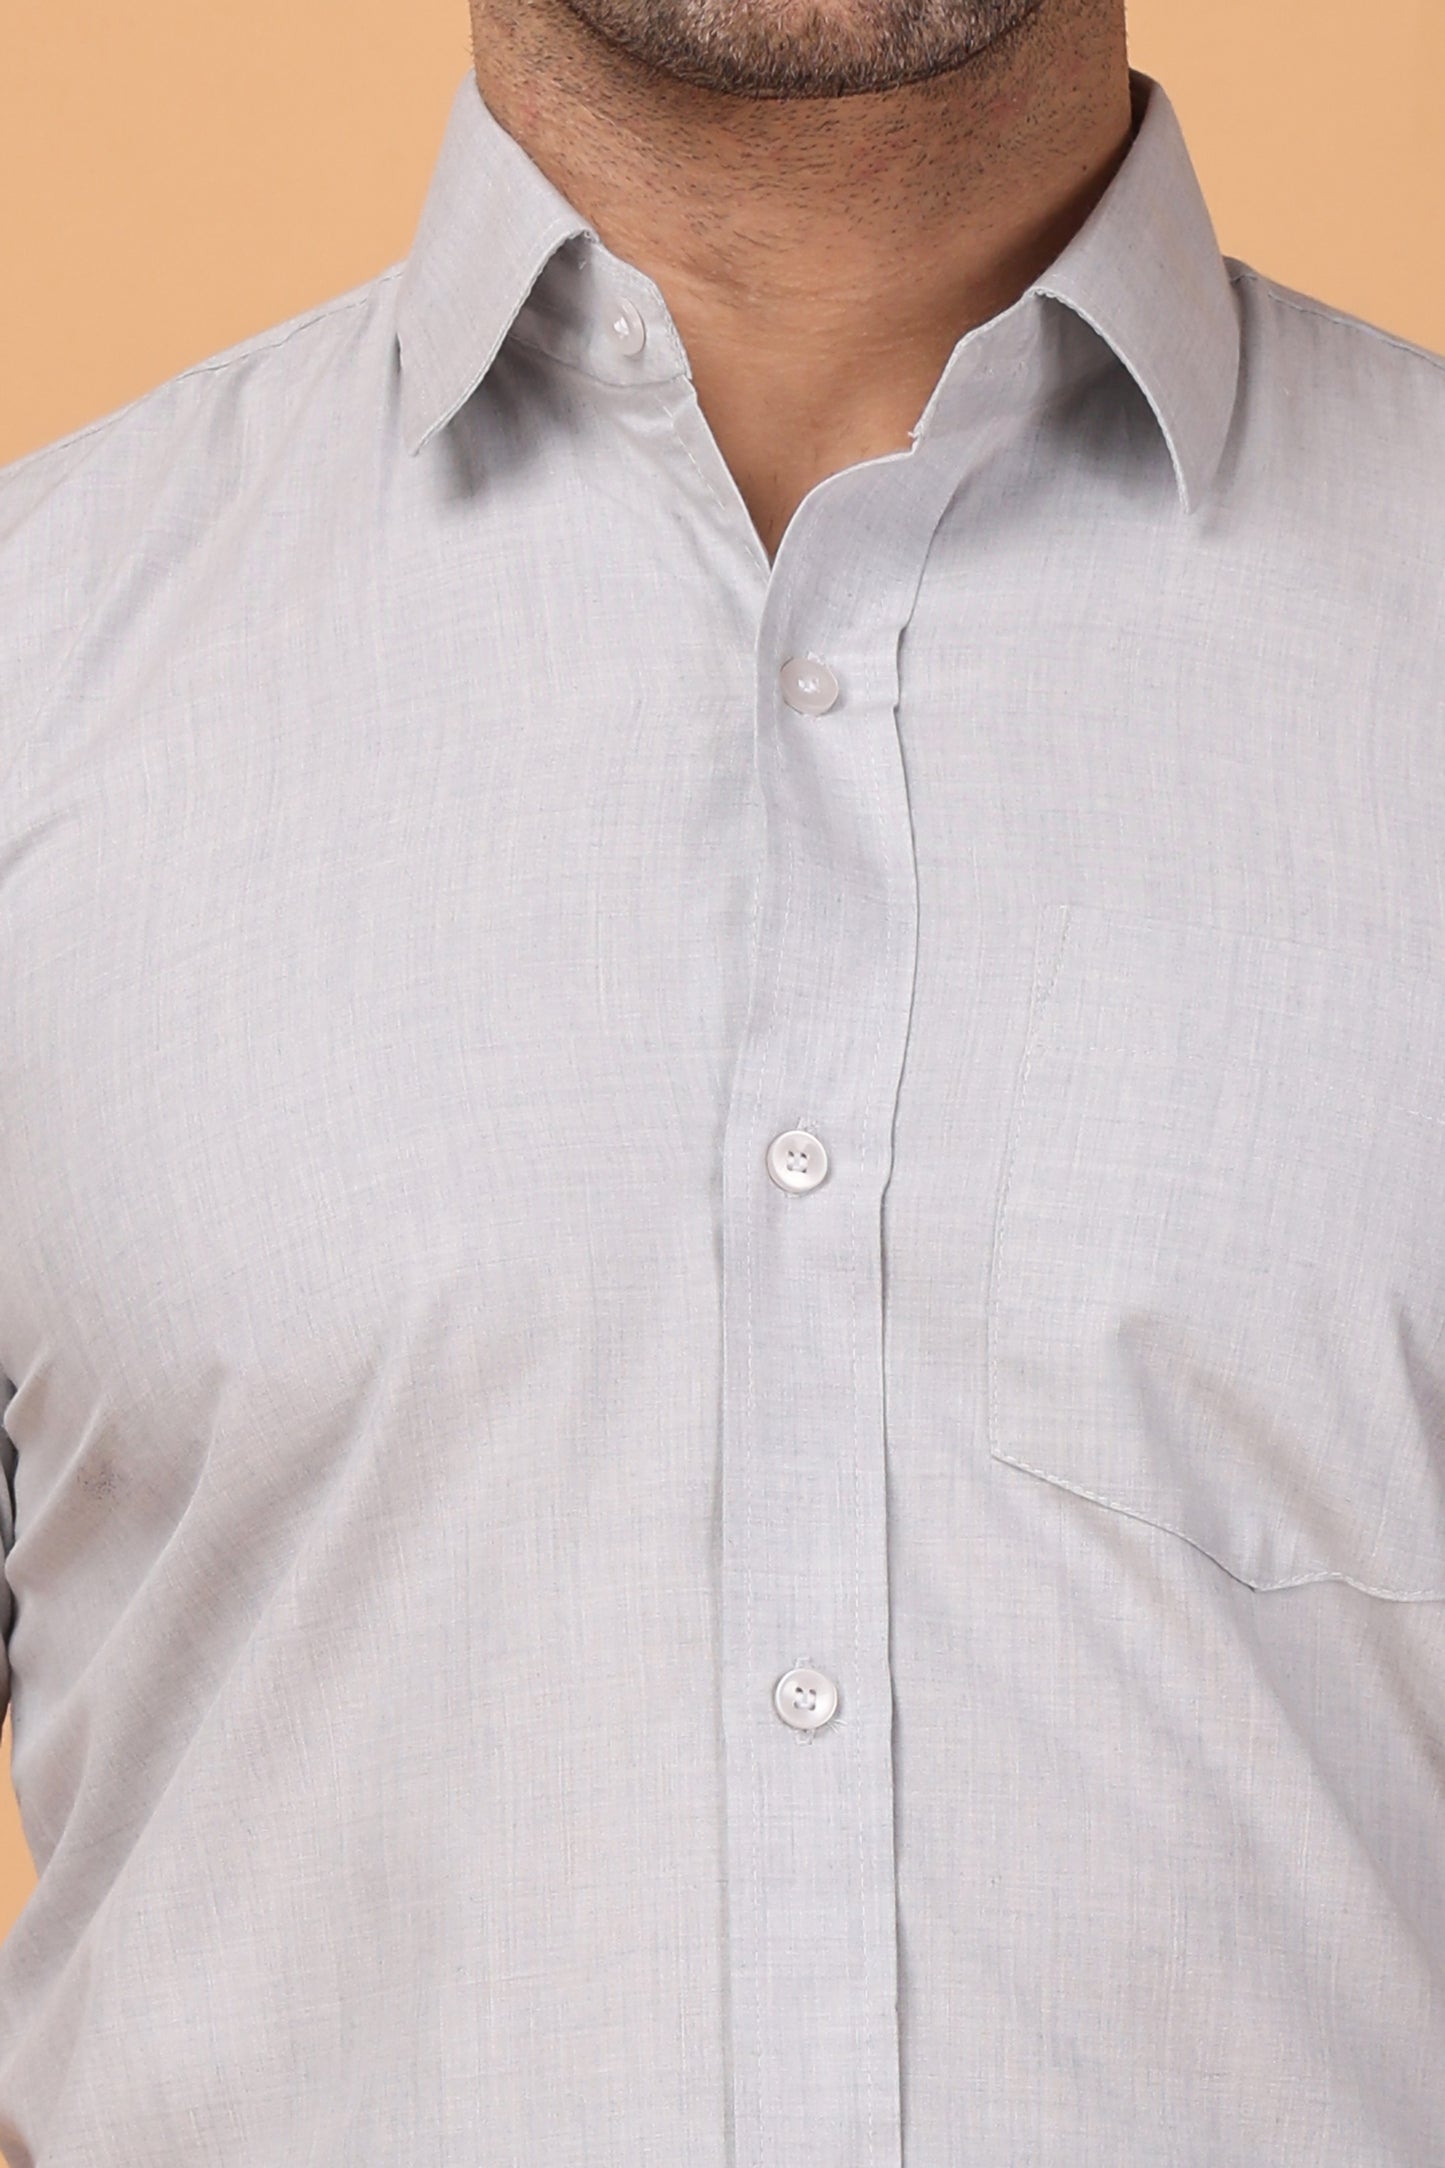 Grey Plus Size Shirts For Men